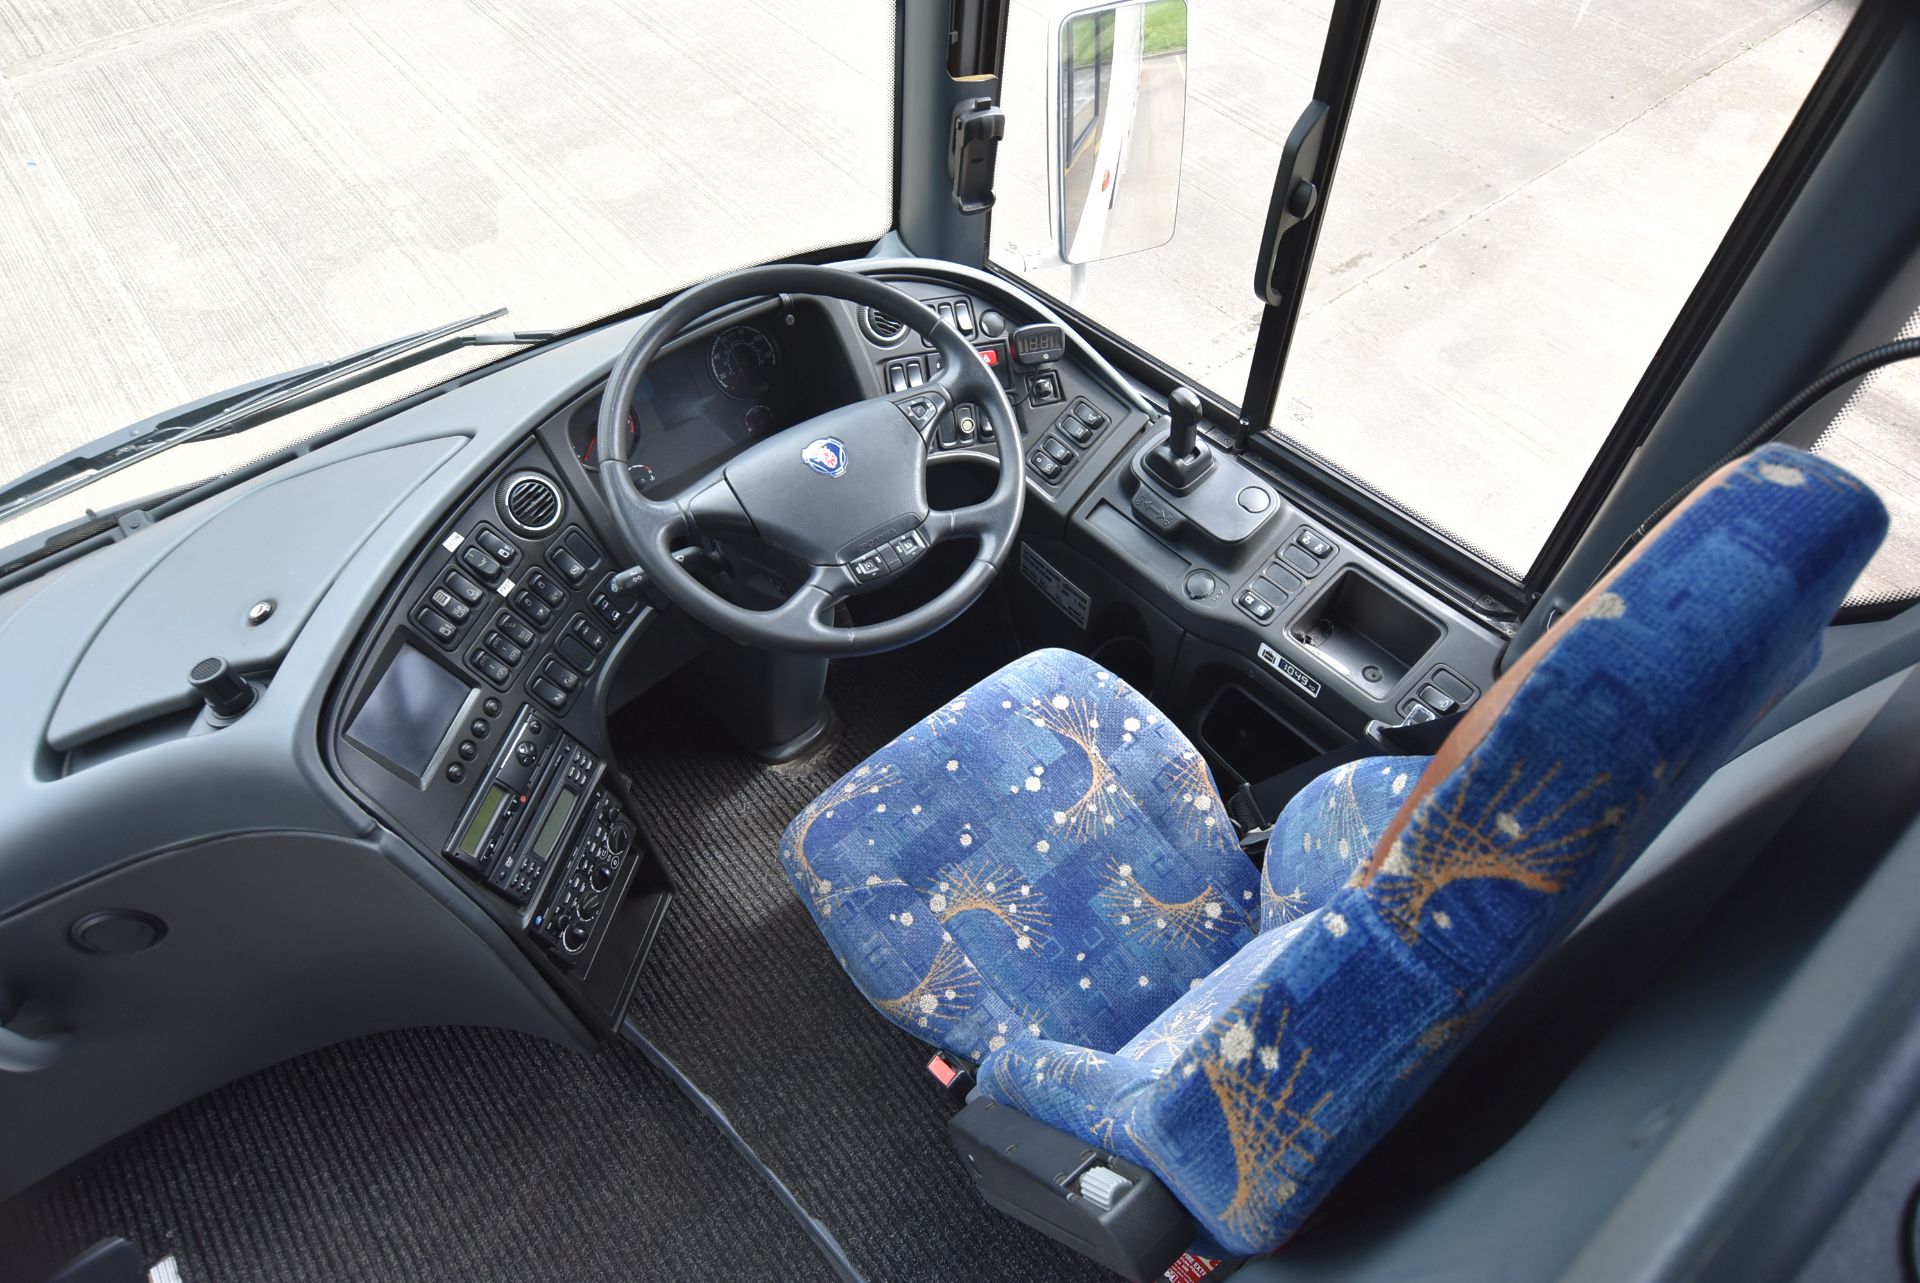 Scania K400 EB OMMI EXPRESS SALOON COACH, registra - Image 12 of 35